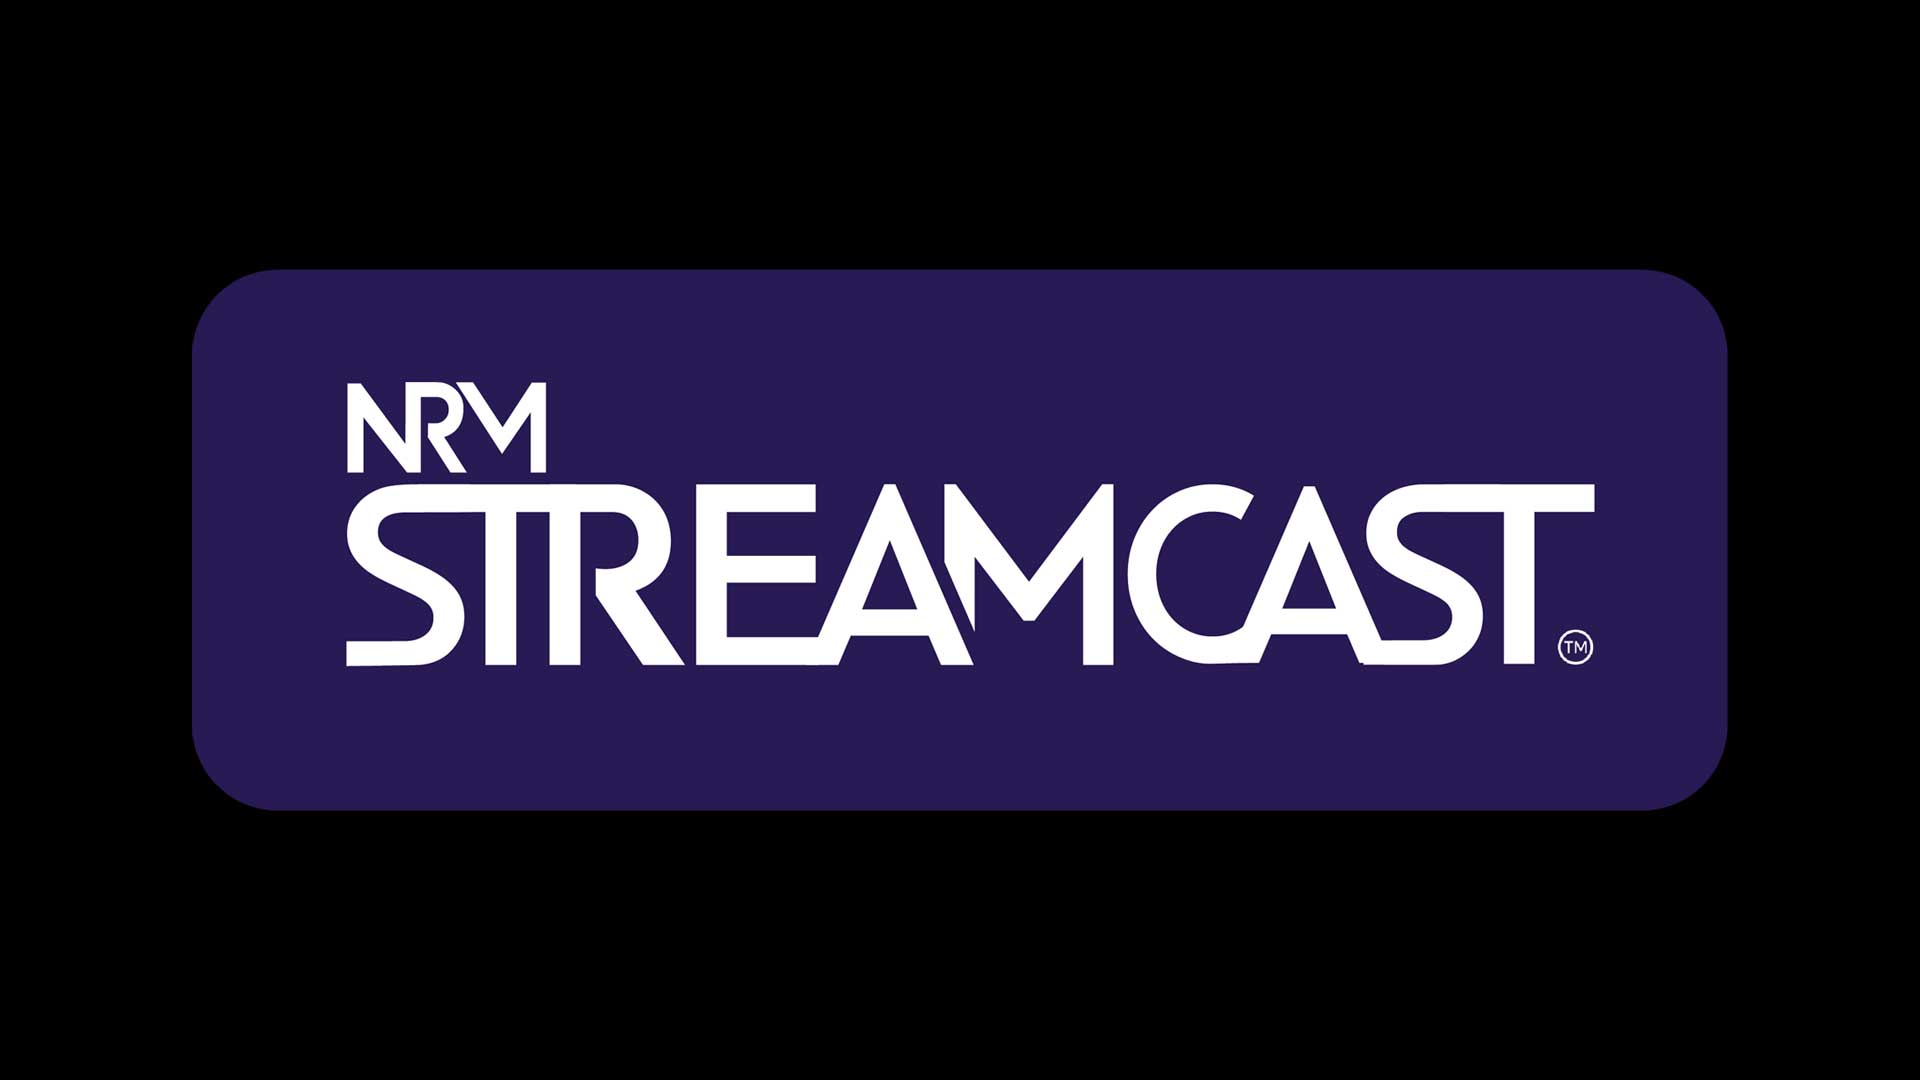 NRM Streamcast Trademark Logo 2019